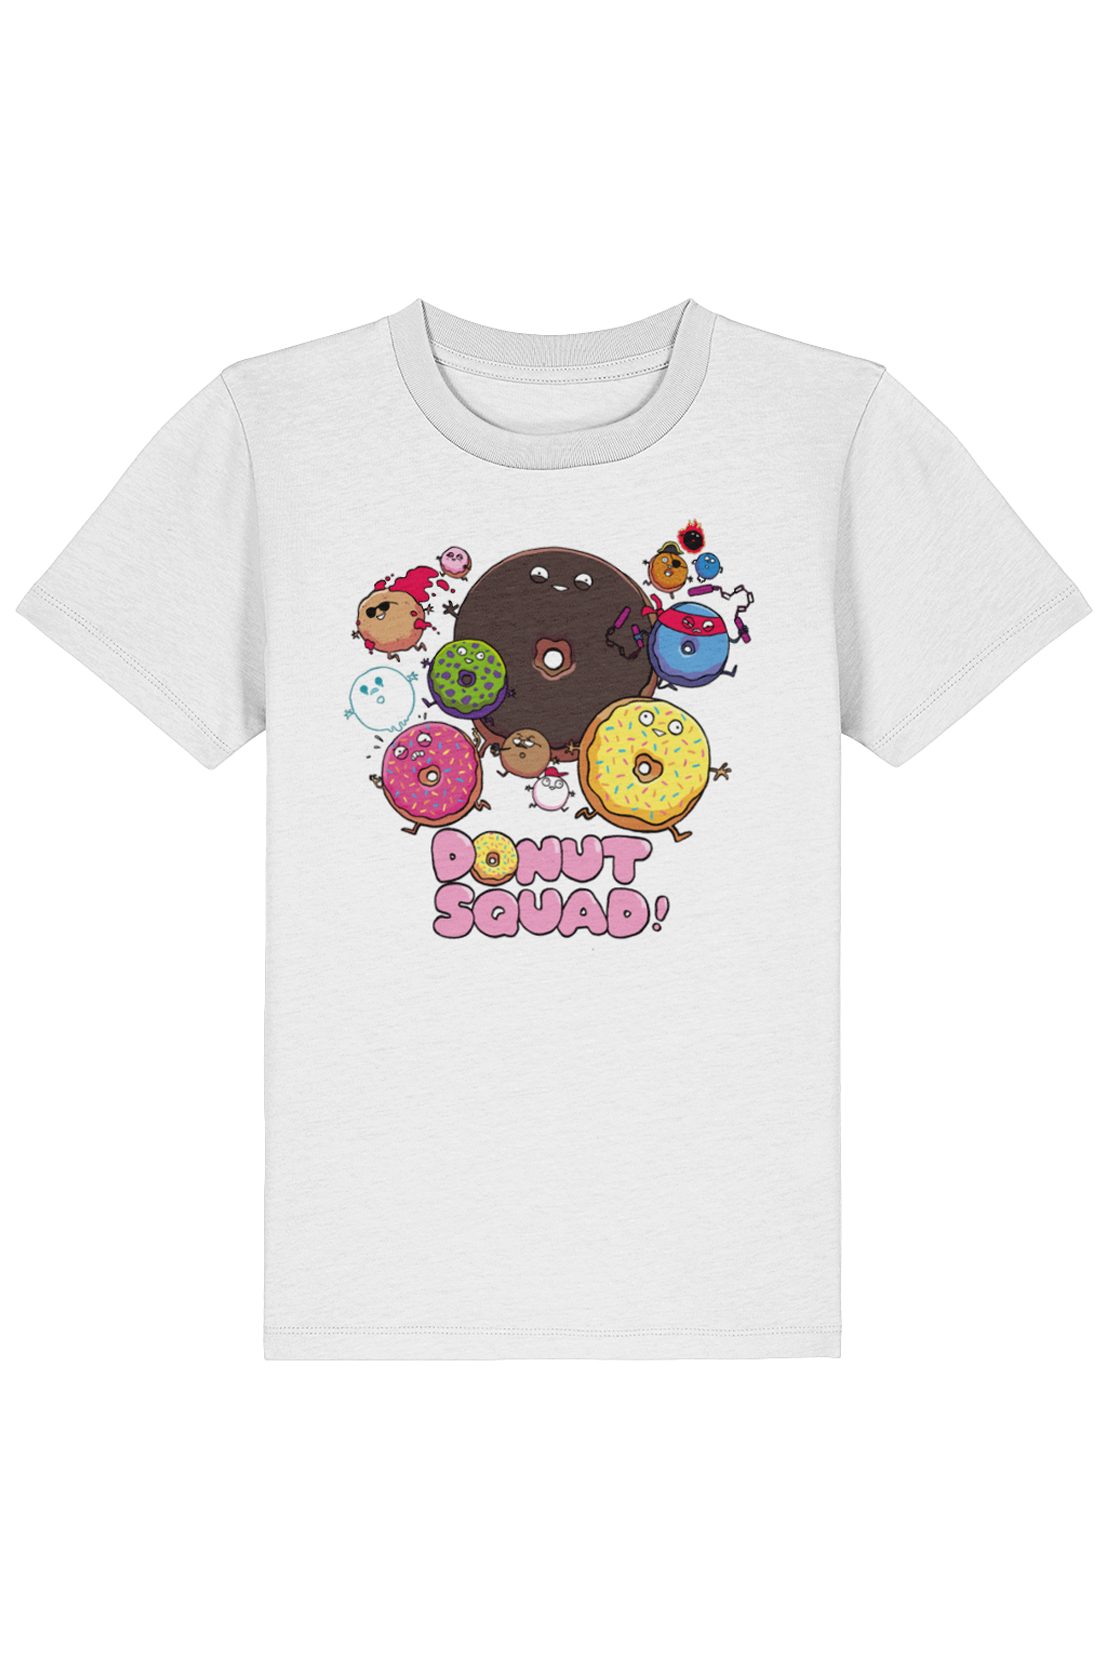 Donut Squad Team Shot kids t-shirt